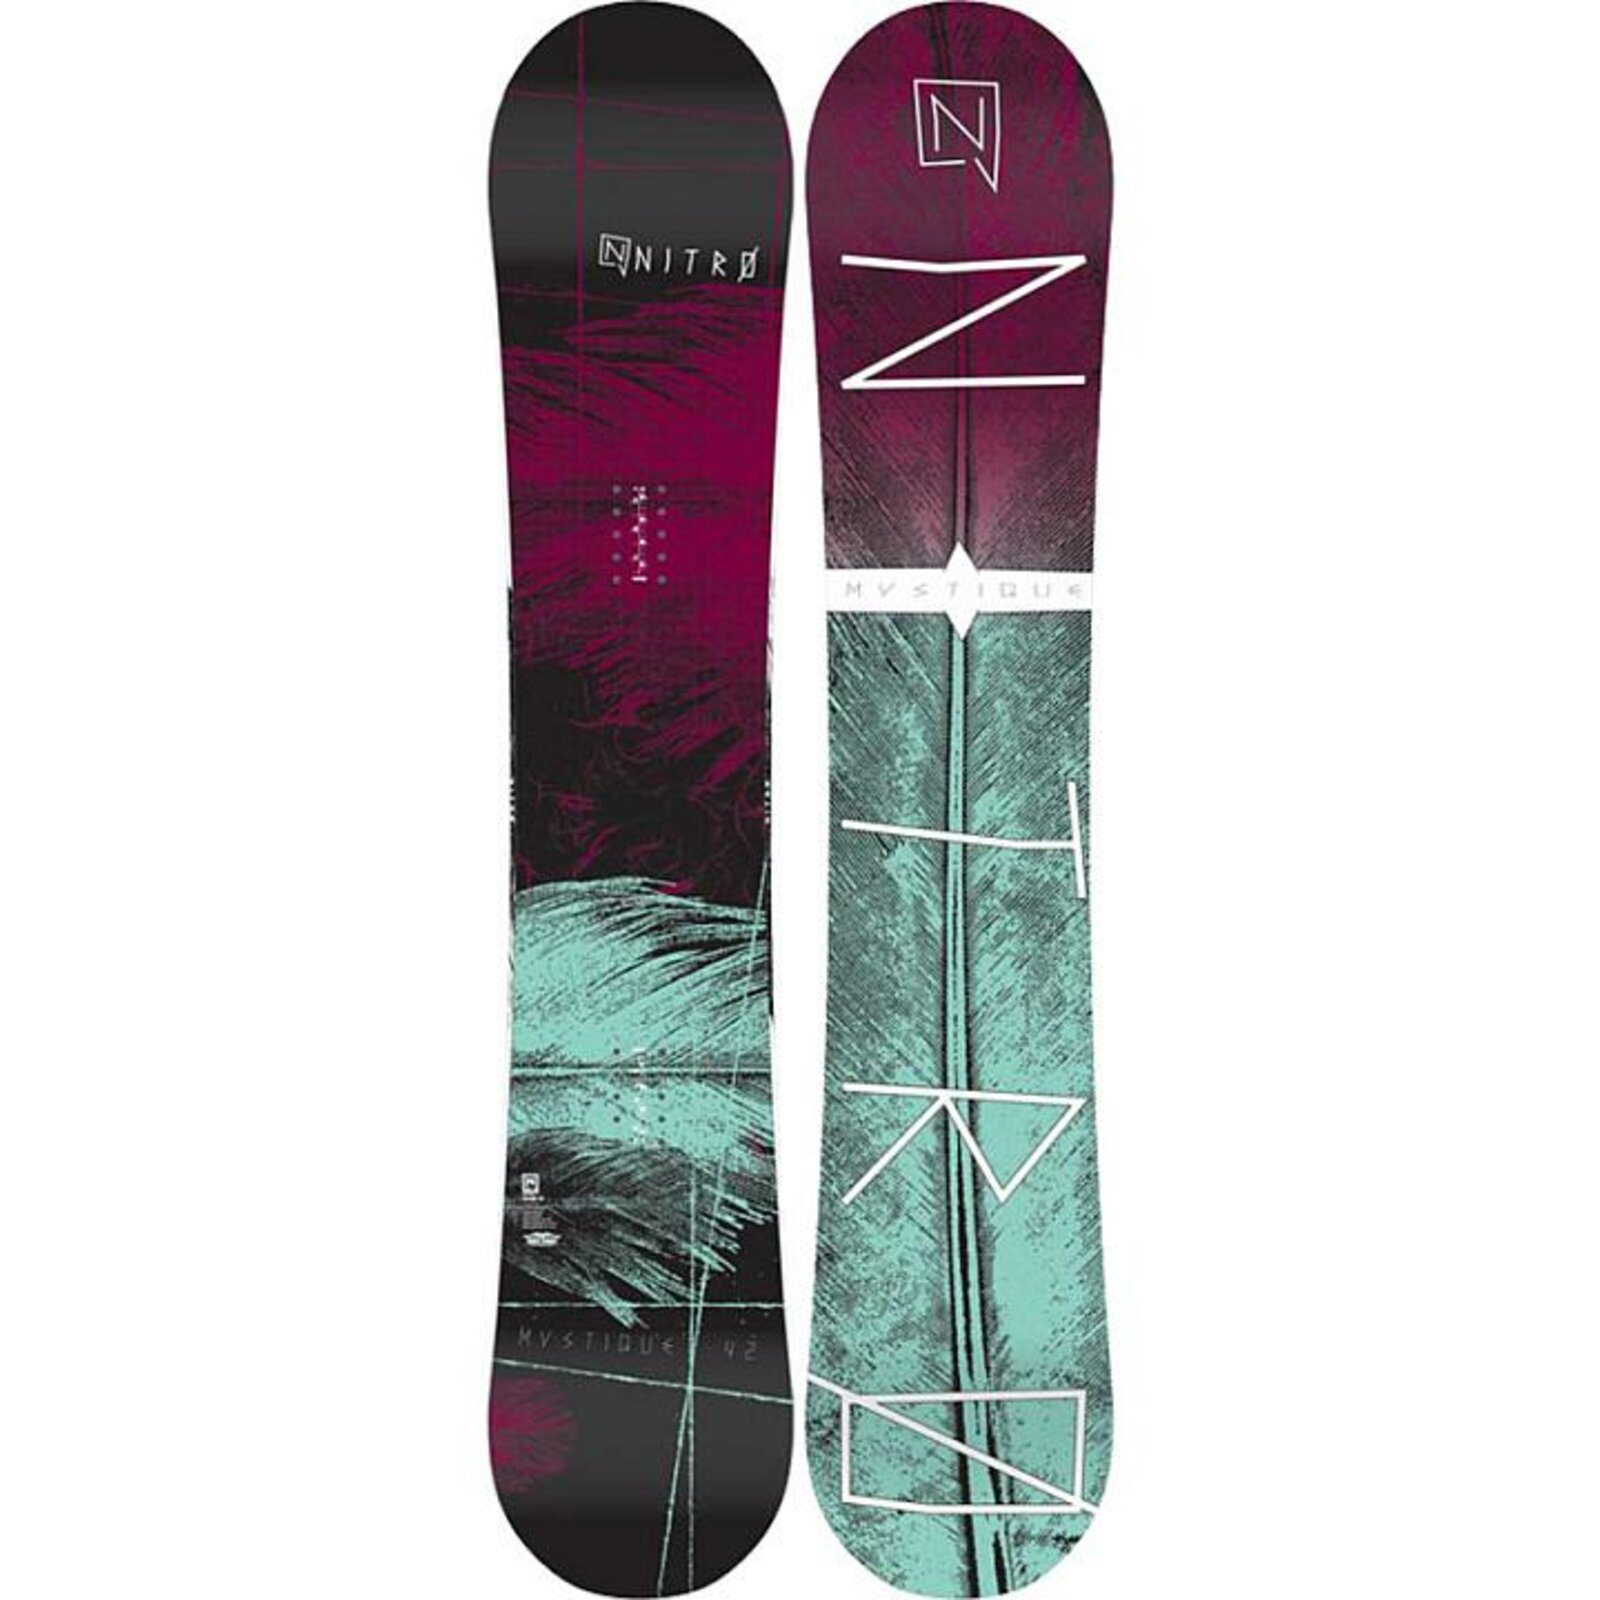 Snowboard NITRO MYSTIQUE, model 2013/2014 | Madeja